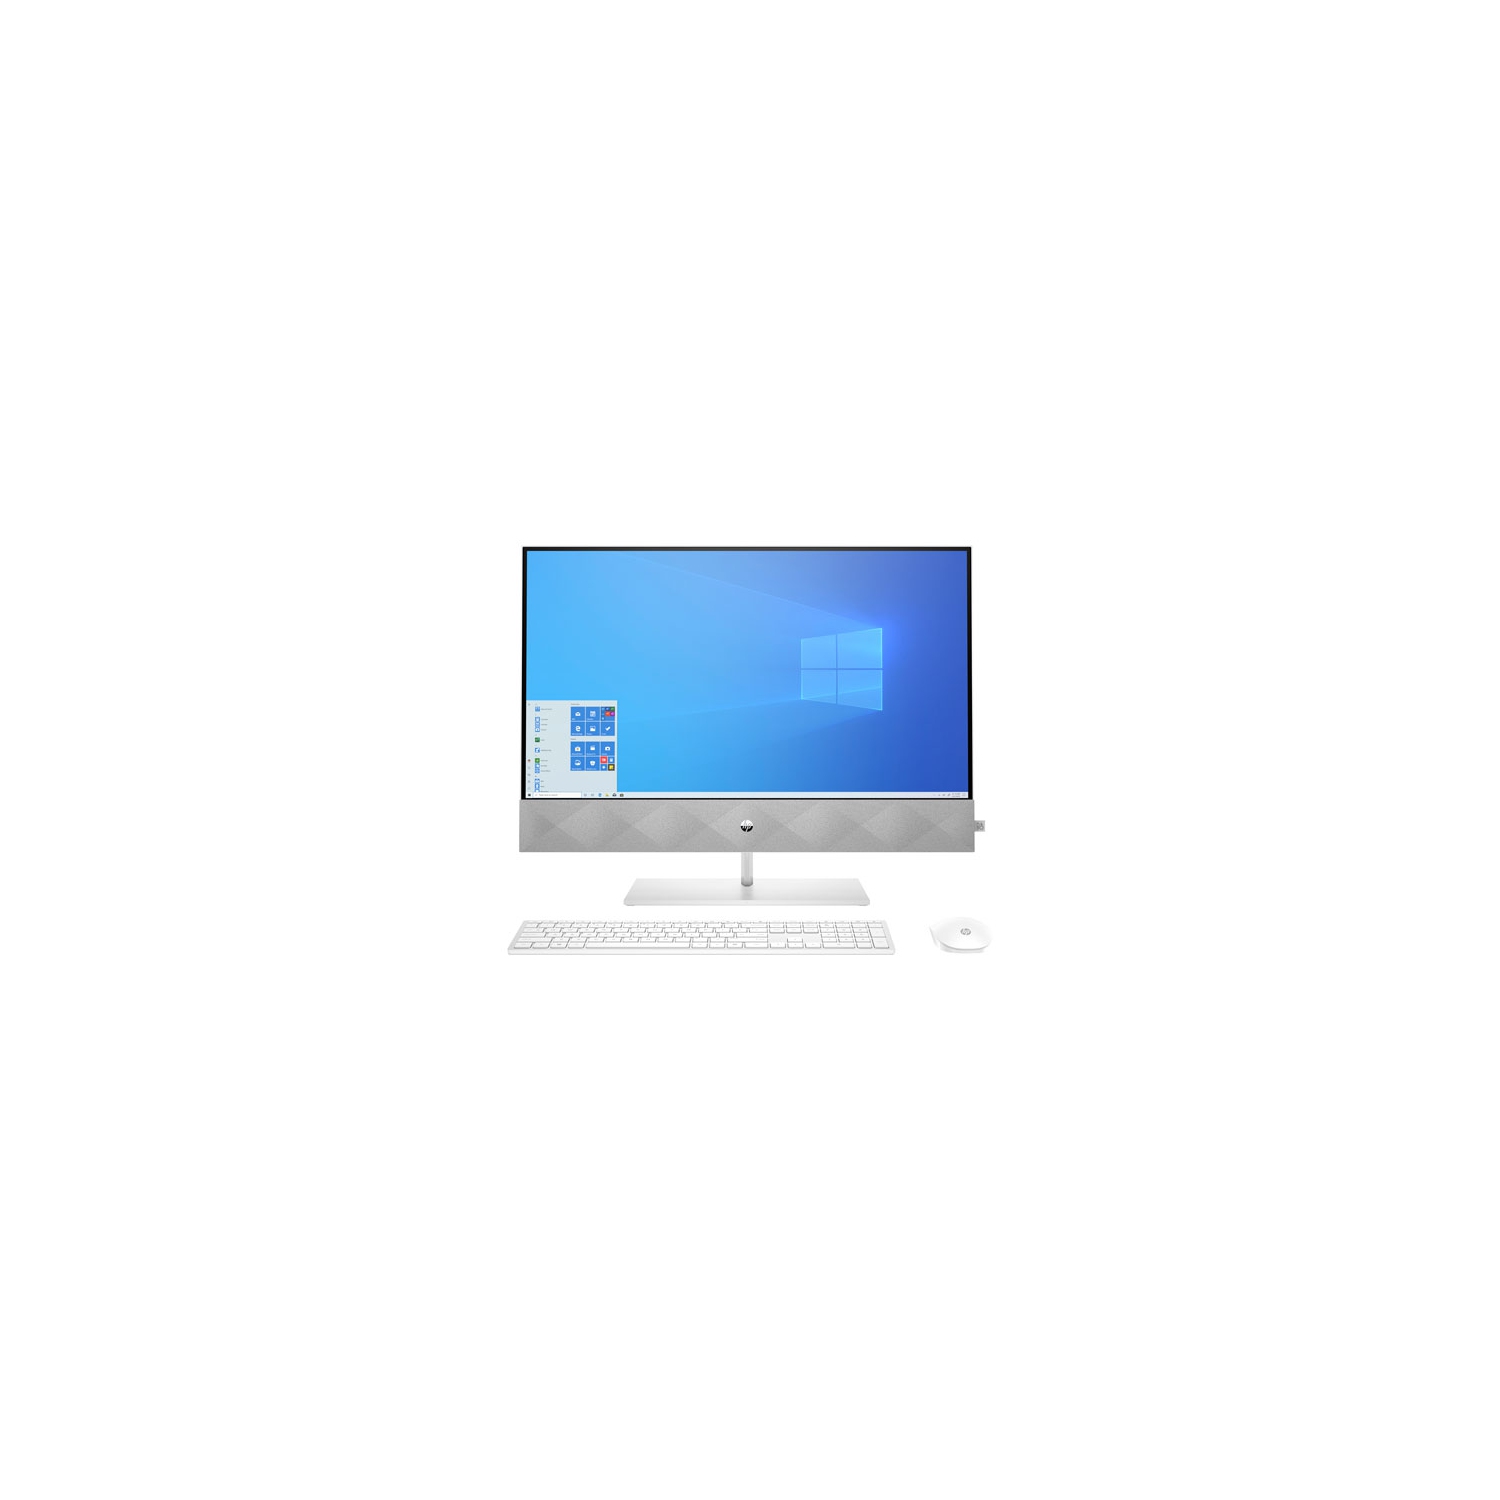 HP Pavilion All-in-One Desktop - White (Intel i7-10700T/1TB HDD/256GB SSD/16GB RAM/Windows 10) - English - Open Box